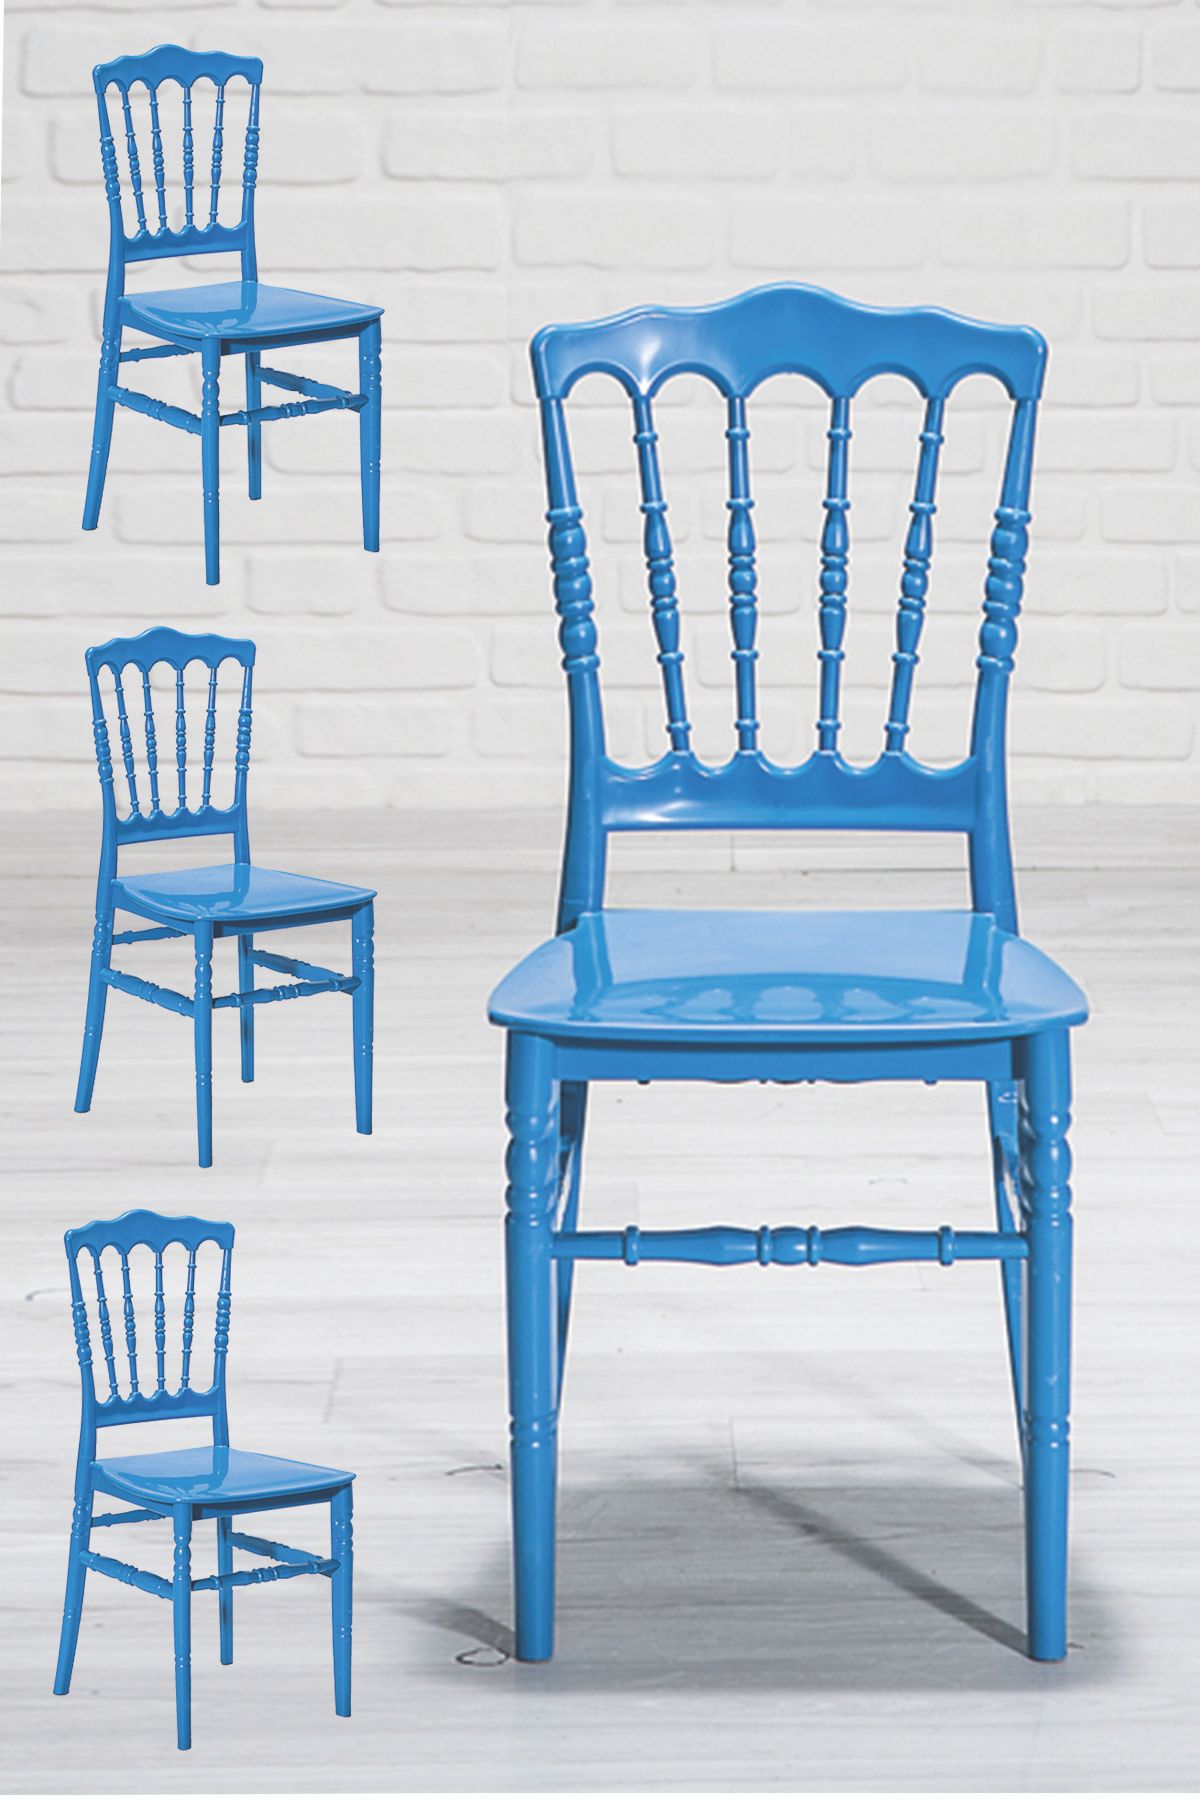 MOBETTO Miray Home Mutfak Sandalyesi 4 Adet - Mavi